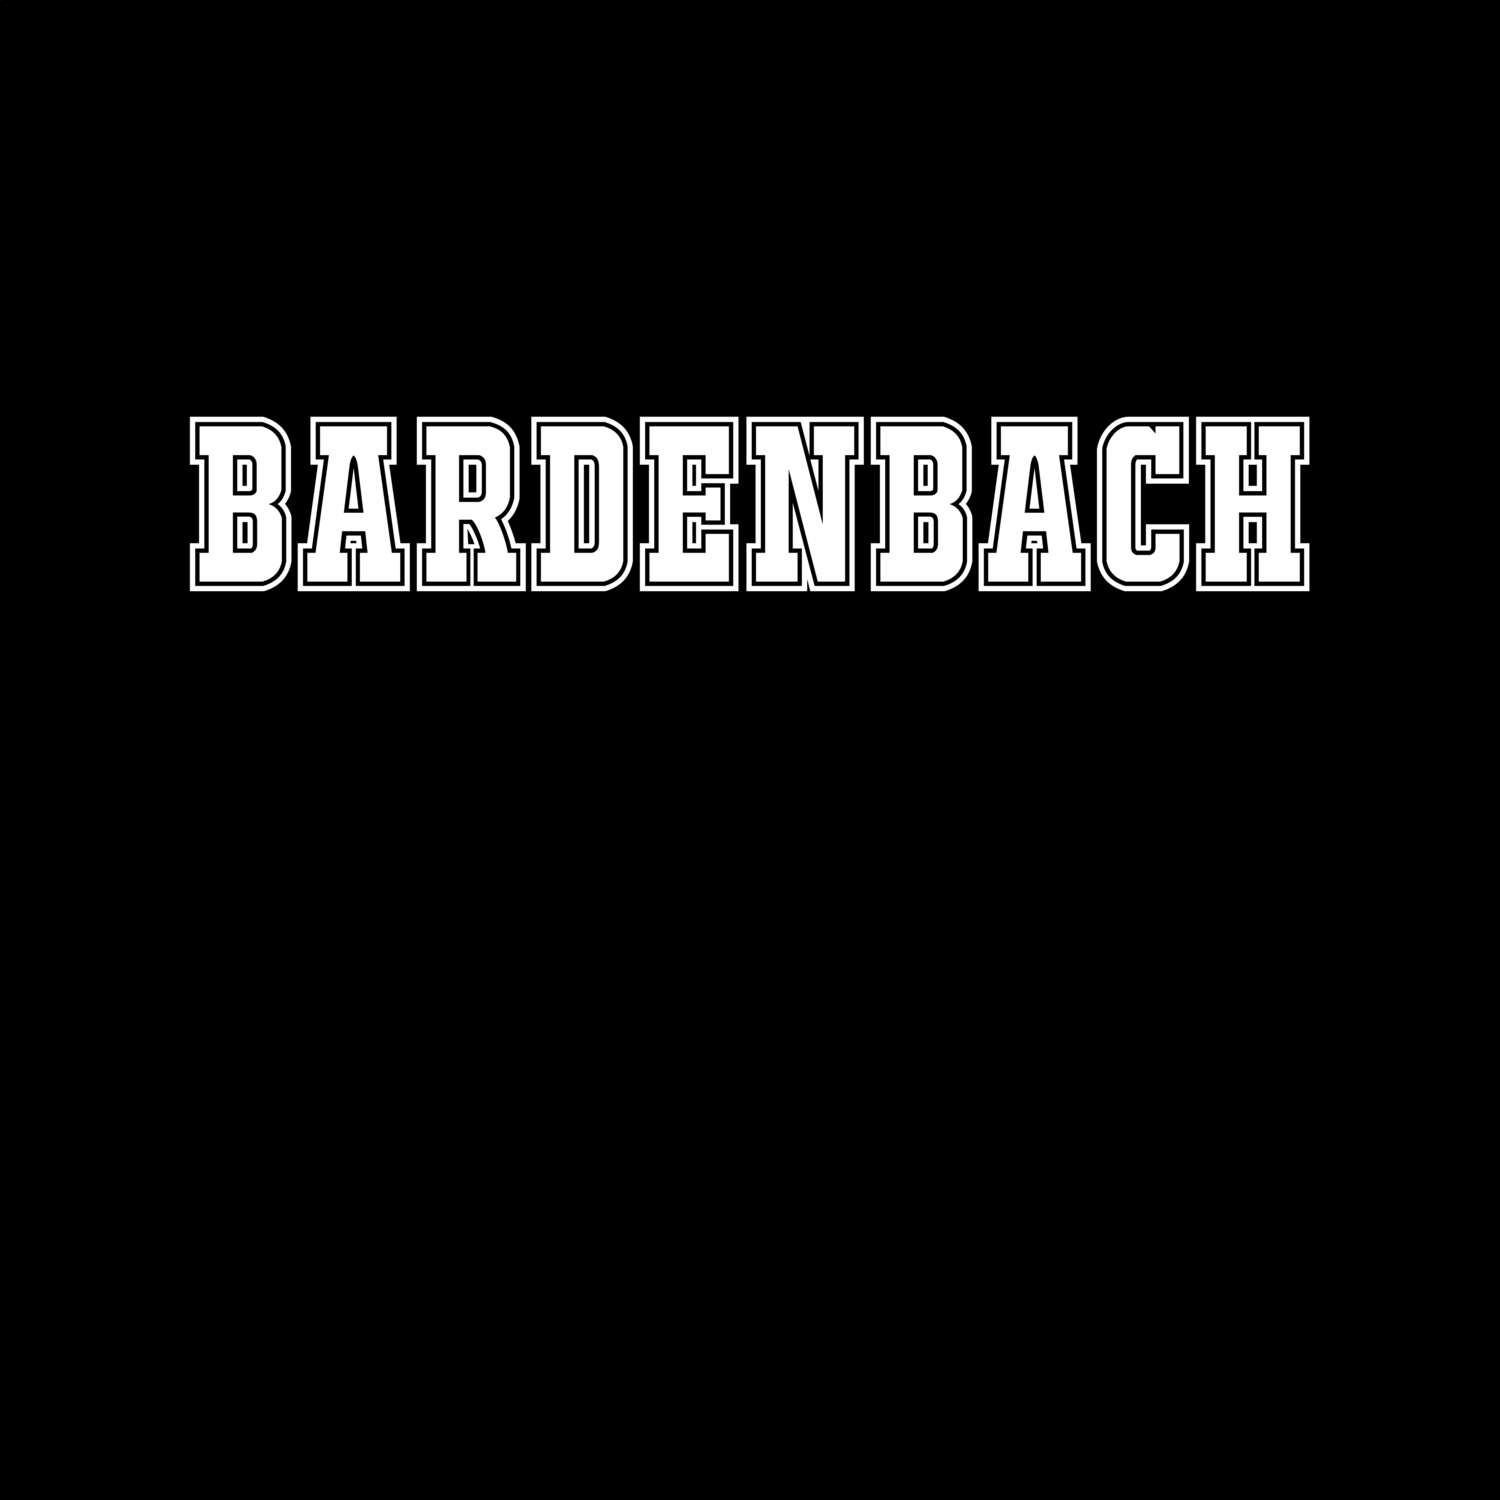 Bardenbach T-Shirt »Classic«